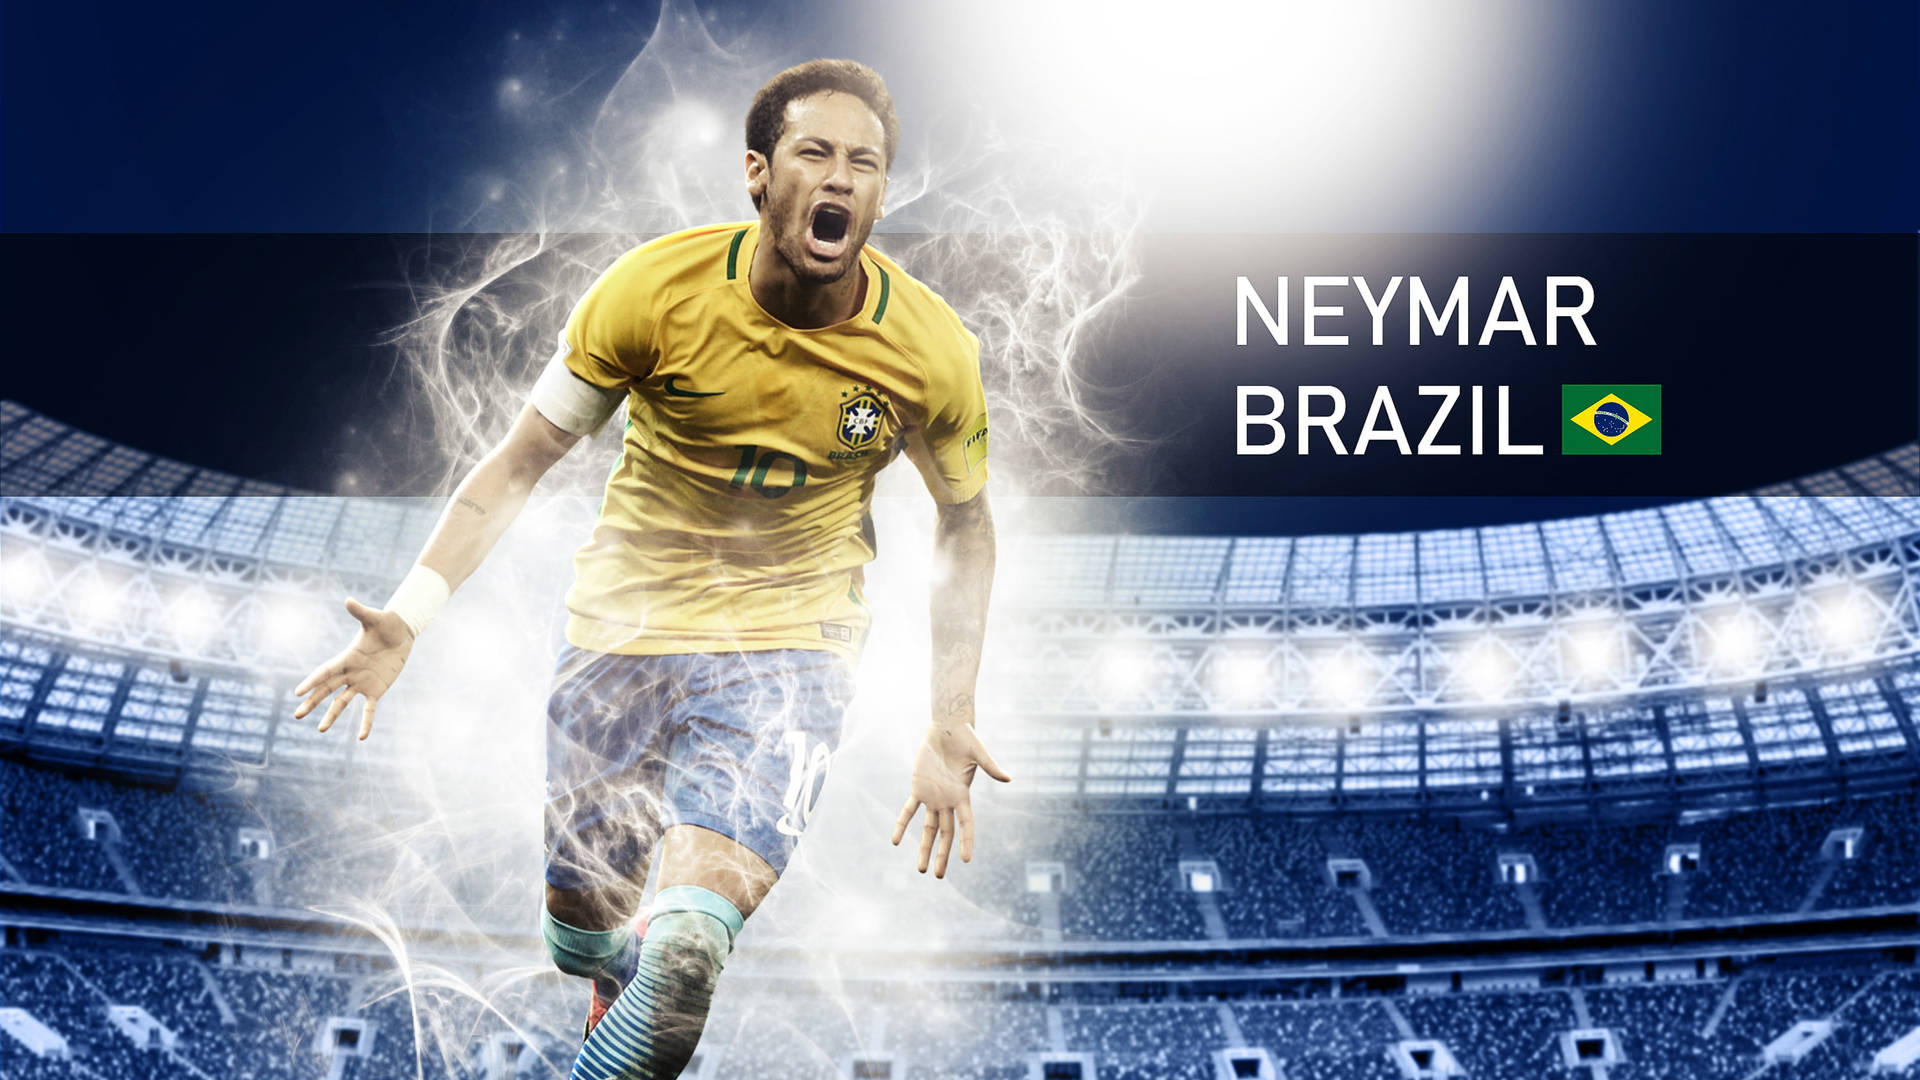 Brasilianischerfußballspieler Neymar In 4k Wallpaper